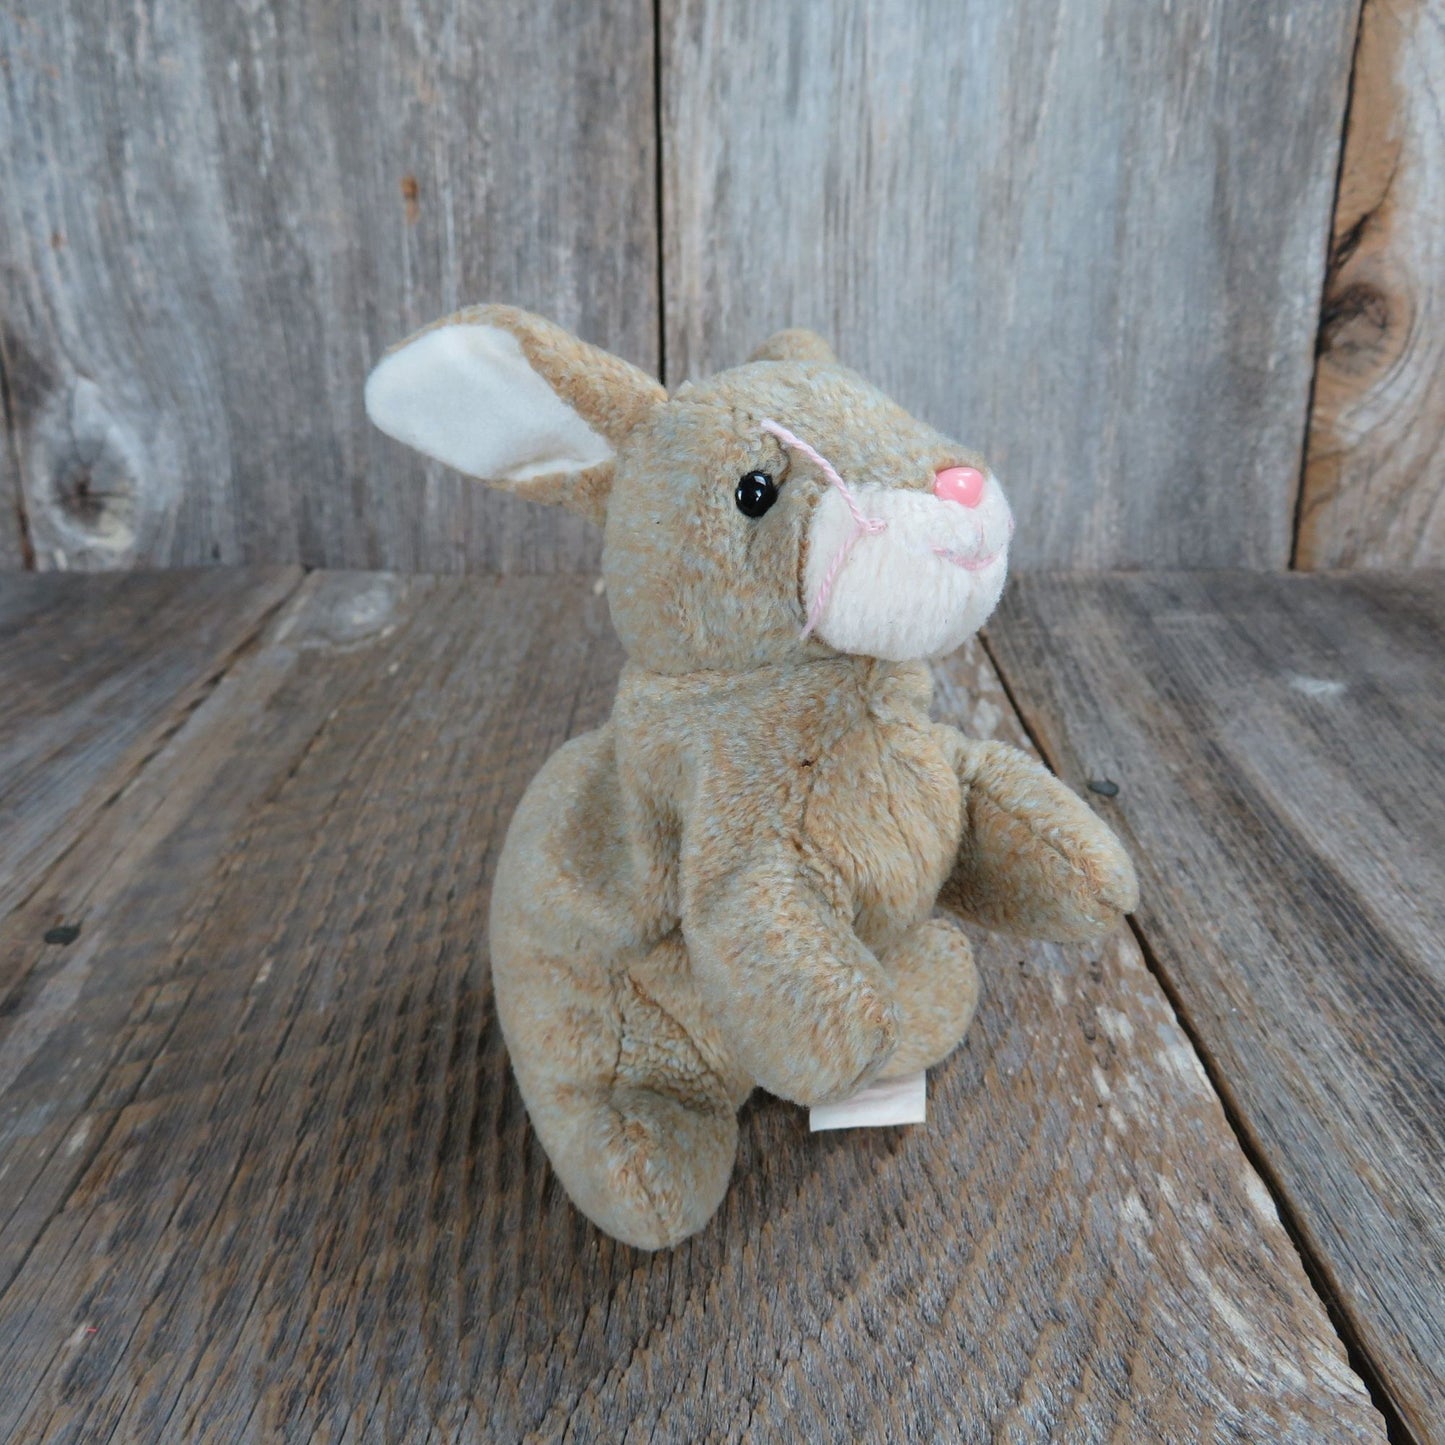 Vintage Bunny Plush Beanie Baby Nibbly Ty Rabbit 1999 Bean Bag Stuffed Animal